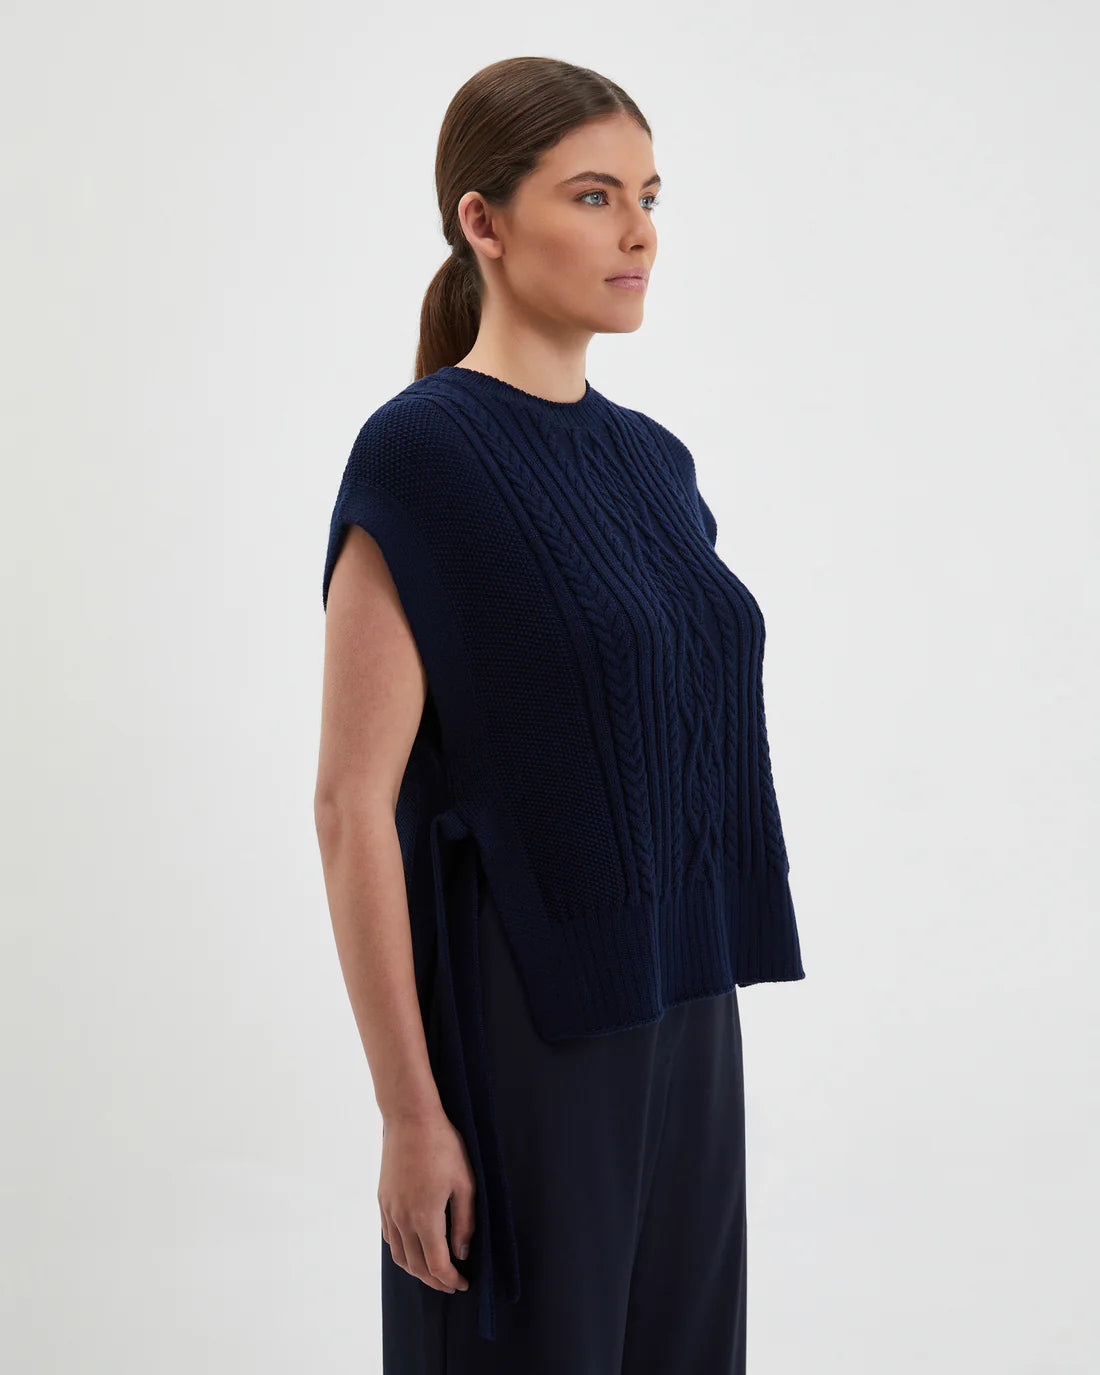 Iris & Wool | Amber Vest - Navy